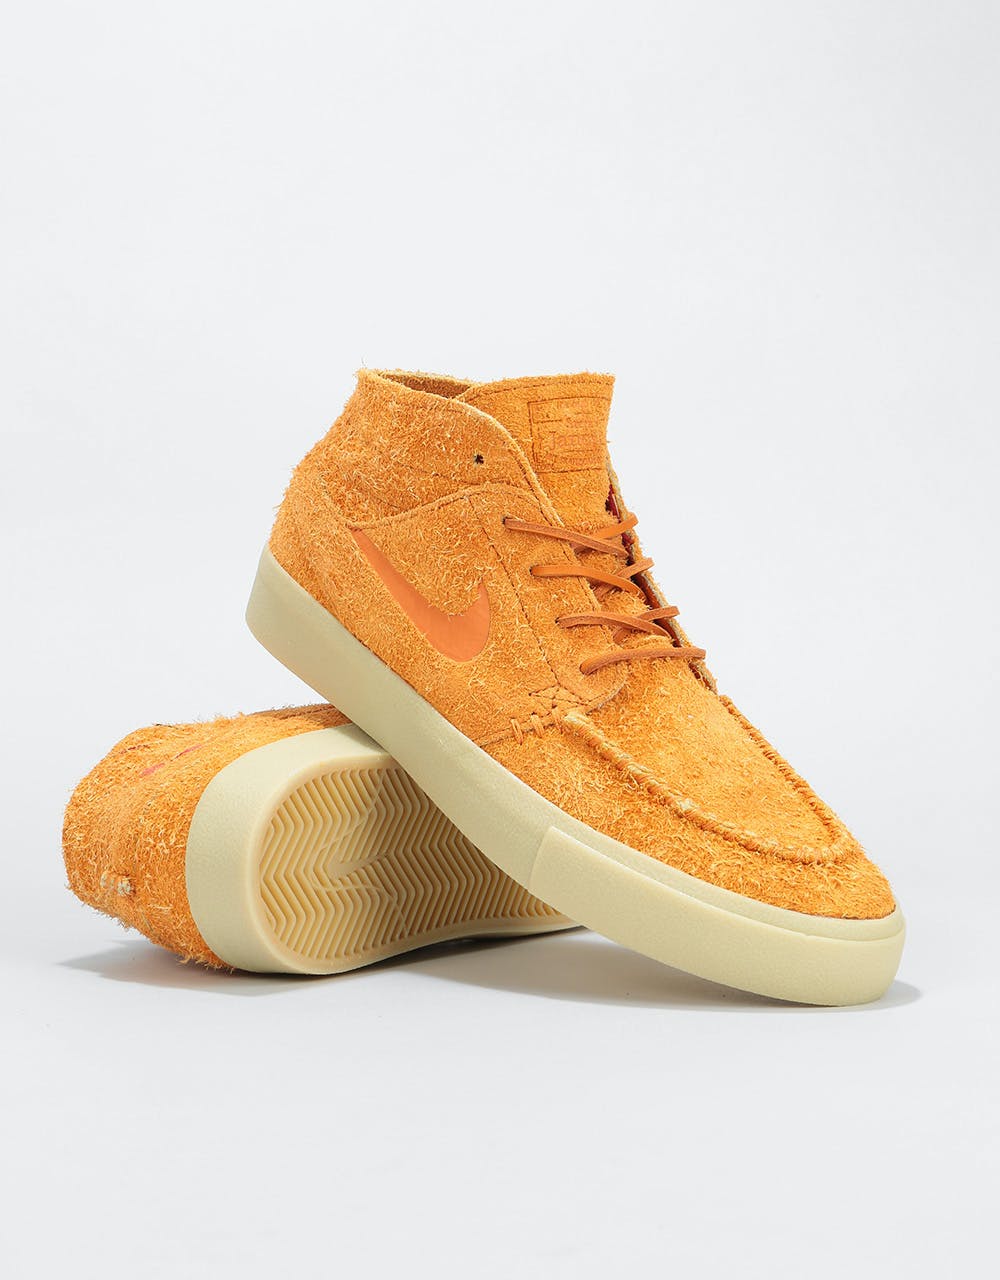 Nike SB Zoom Janoski Mid Crafted Skate Shoes - Cinder Orange/Team Gold